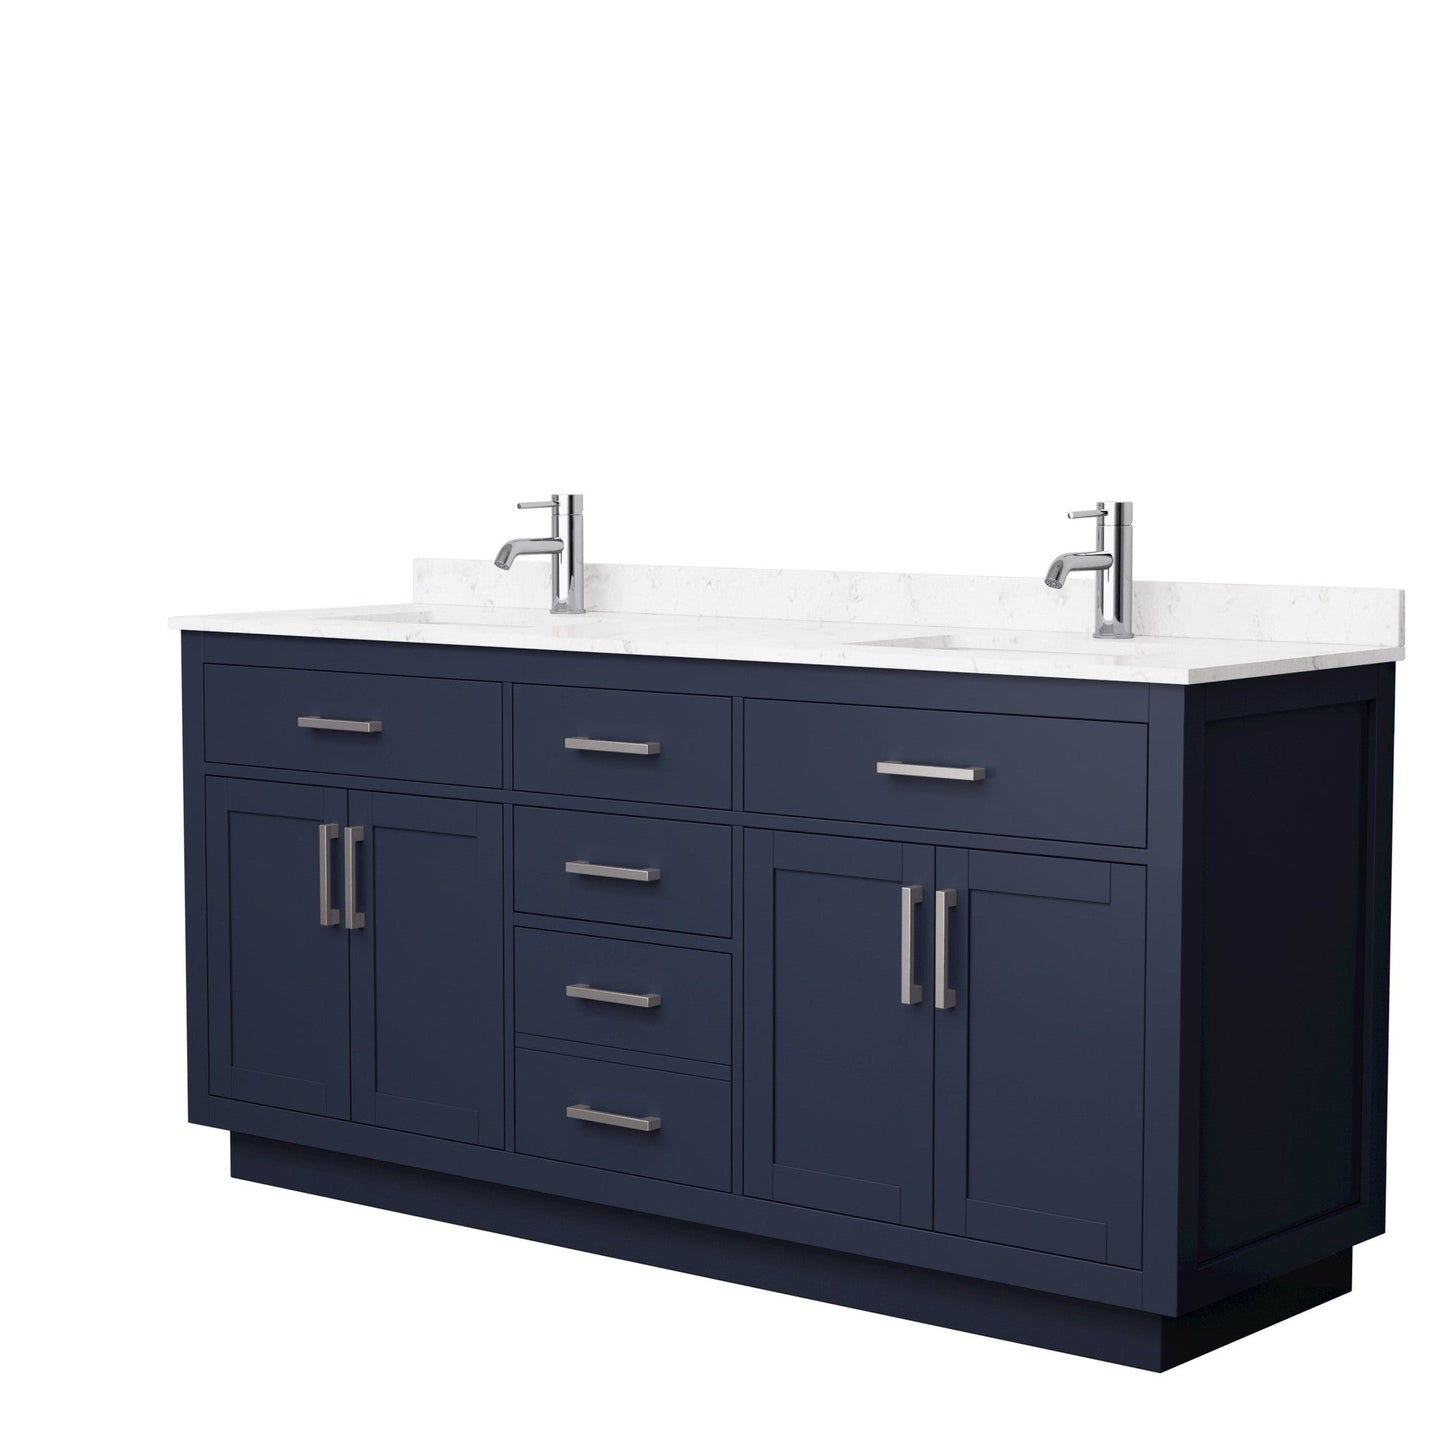 Beckett 72" Double Bathroom Vanity With Toe Kick in Dark Blue, Carrara Cultured Marble Countertop, Undermount Square Sinks, Brushed Nickel Trim